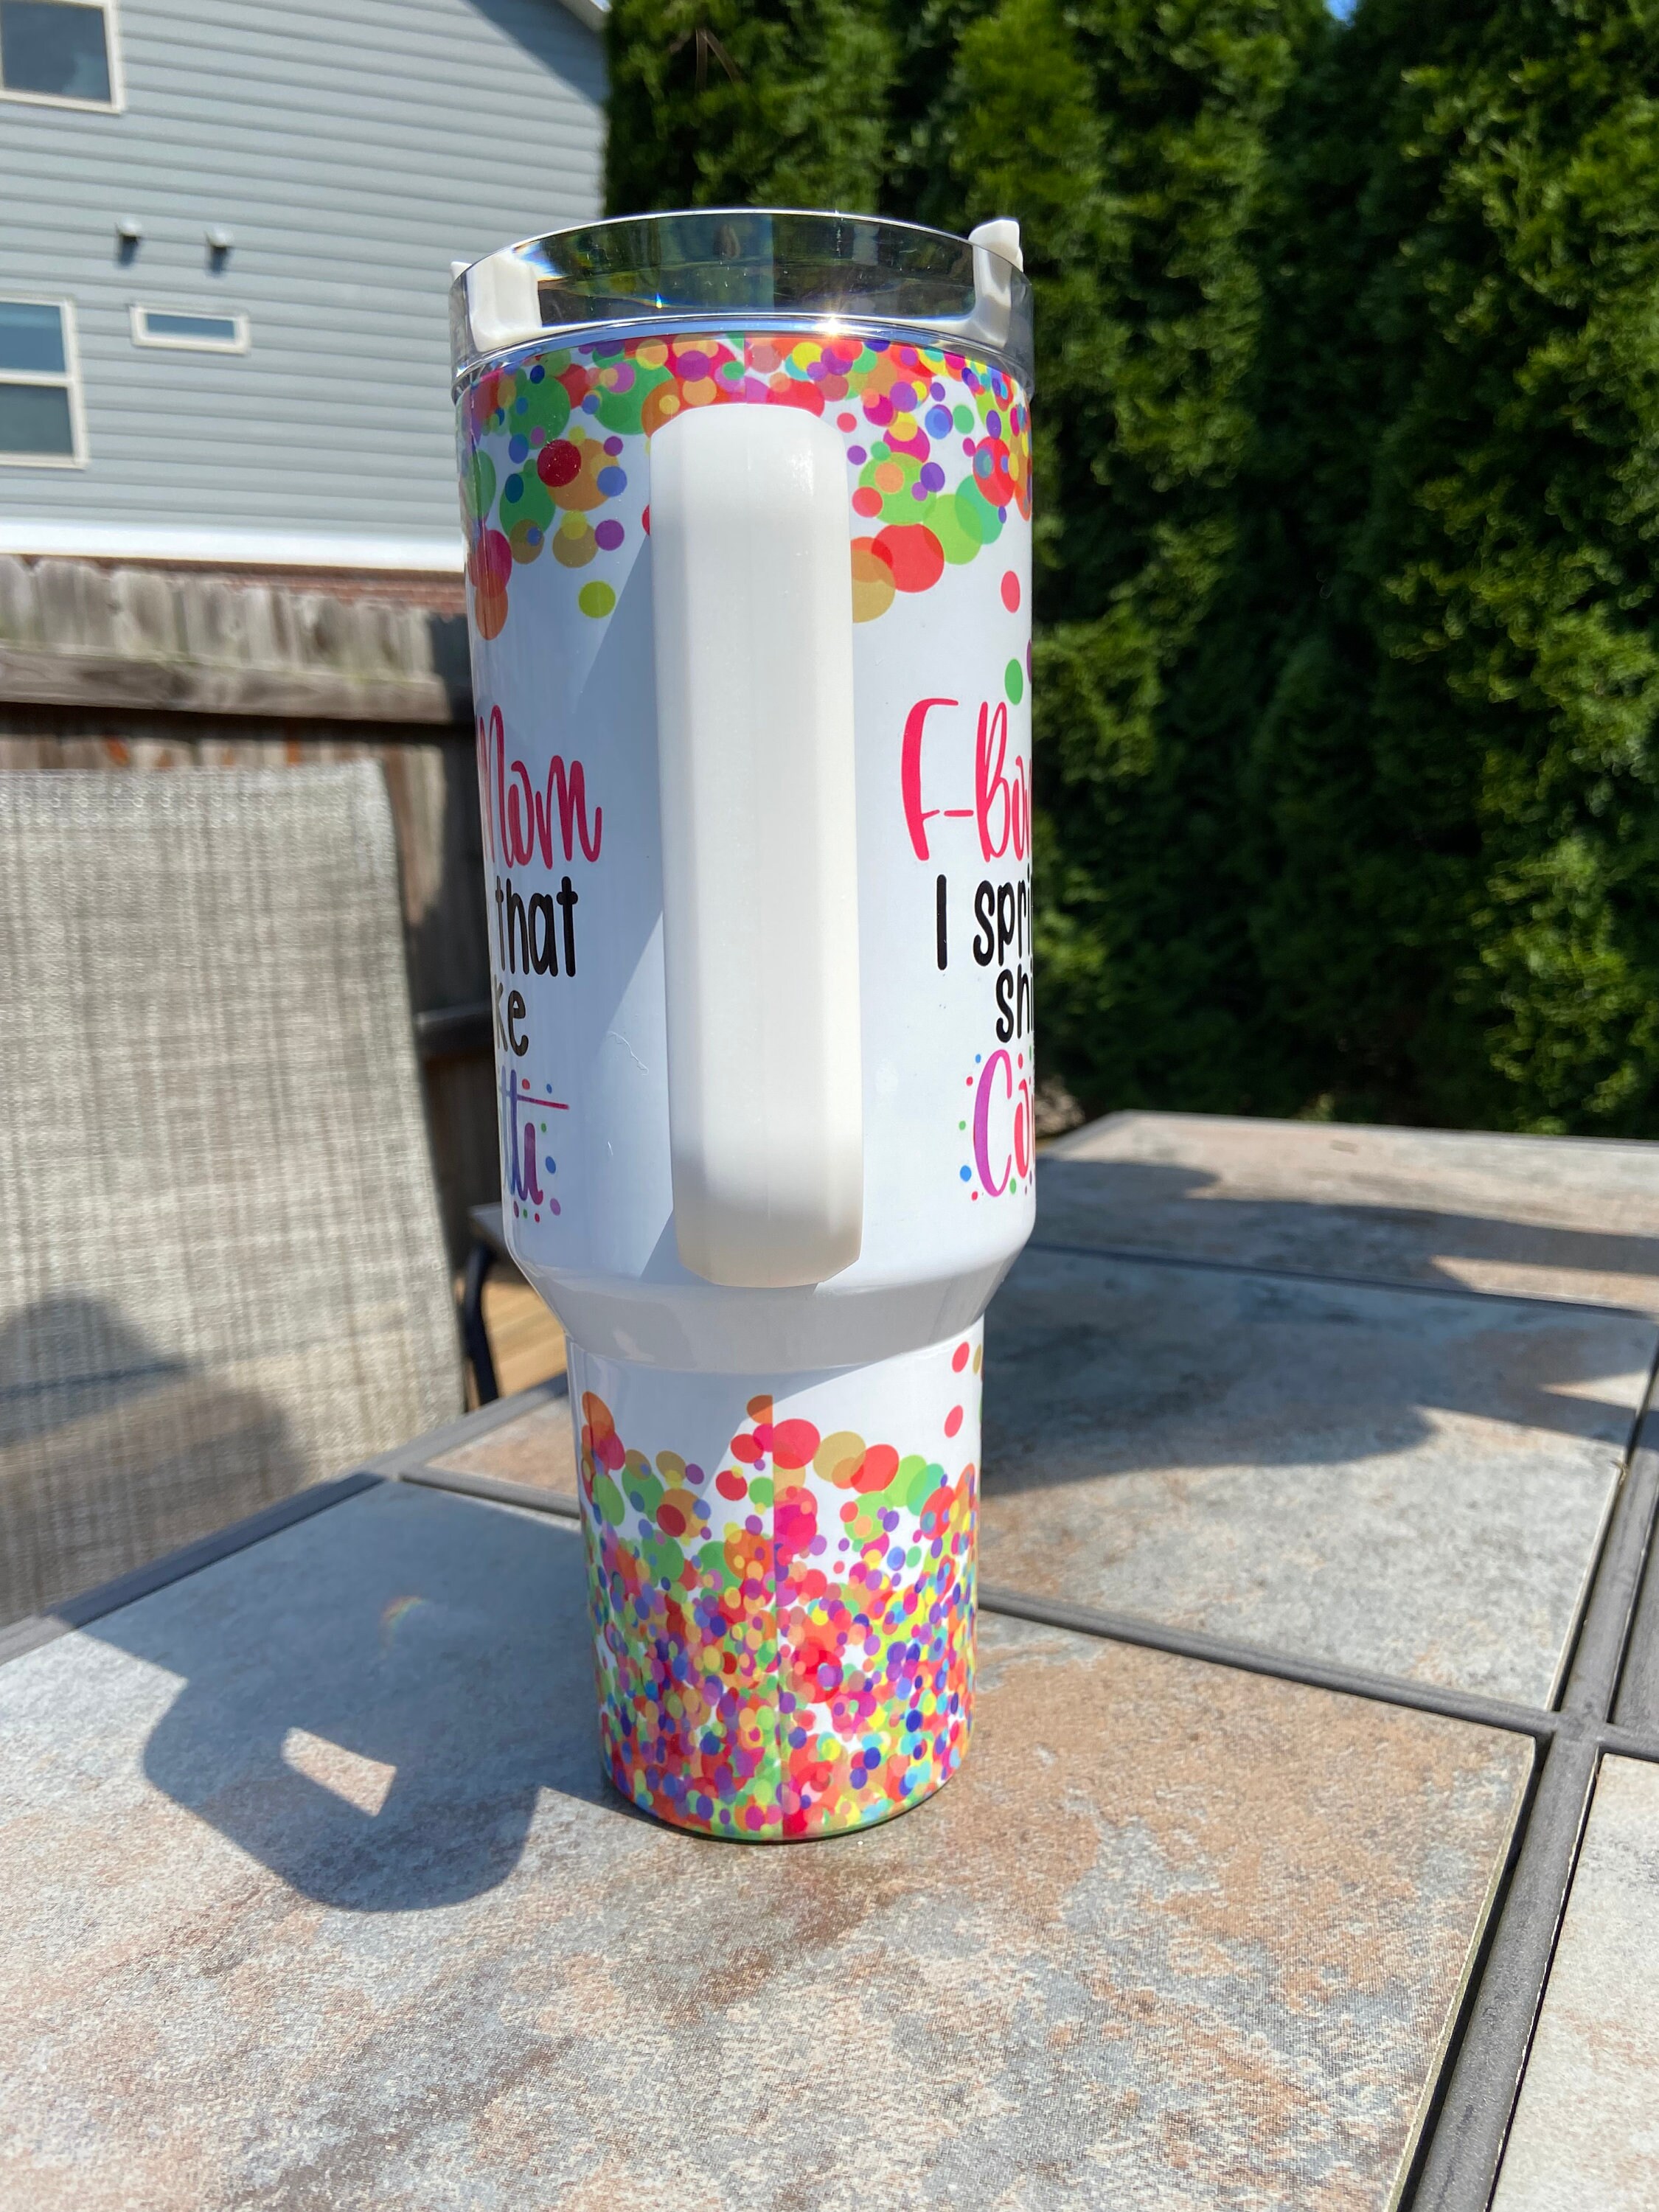 F Bomb Mom Confetti Design Handmade 40 Ounce Insulated Tumbler